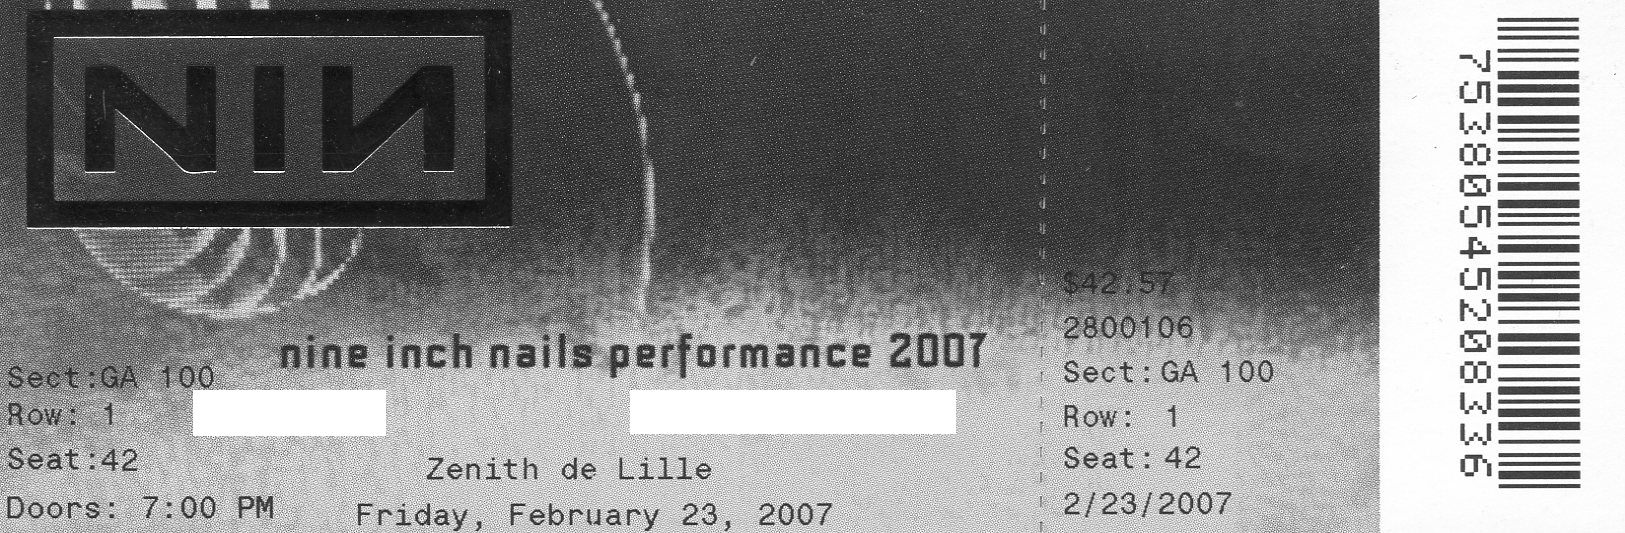 2007/02/23 Ticket